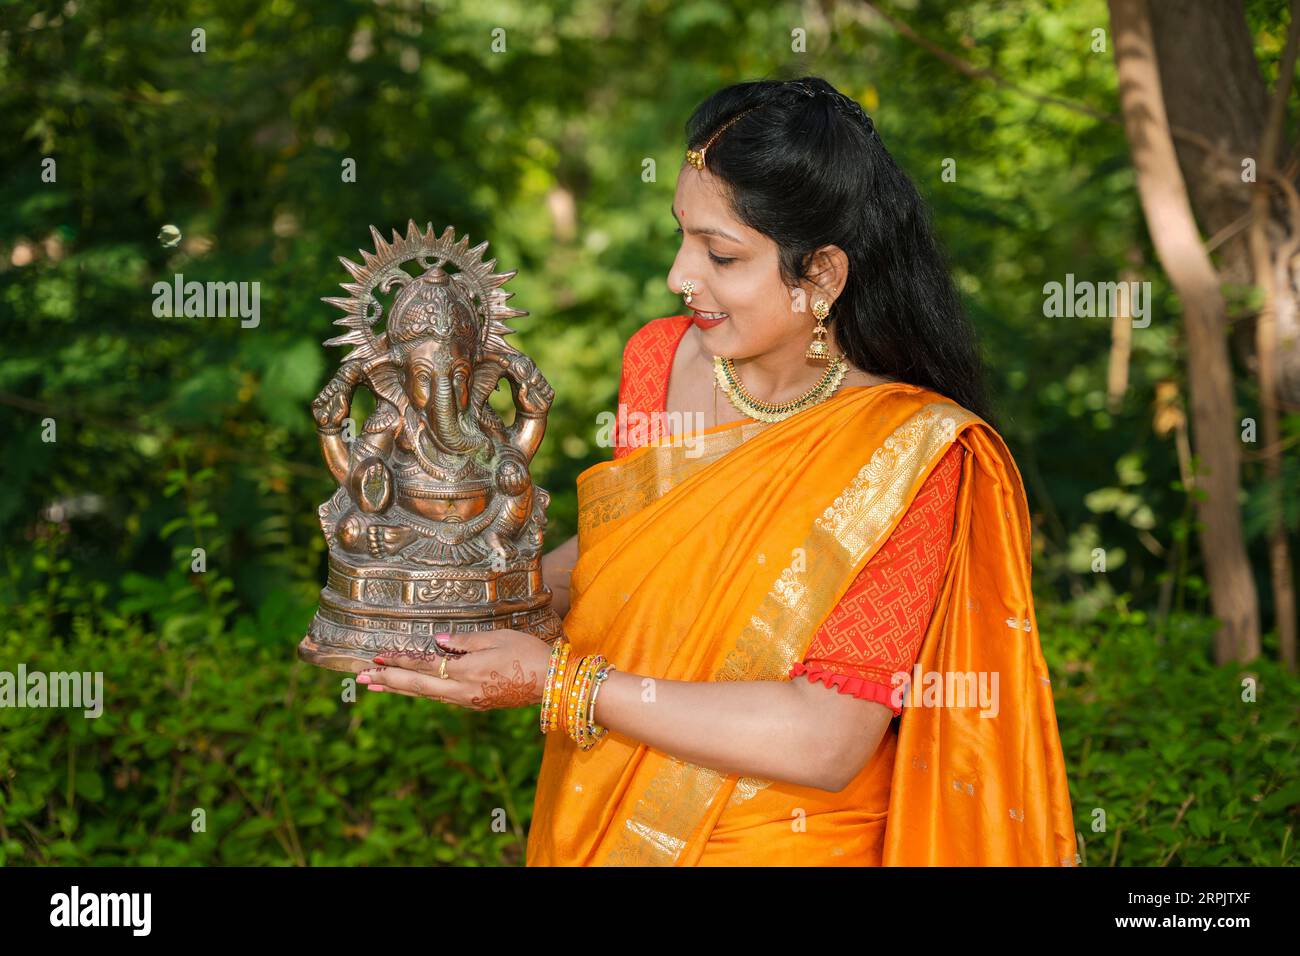 Happy young indian woman wearing saree holding lord Ganesha idol outdoor at park celebrating Ganesh Chaturthi festival. Stock Photo